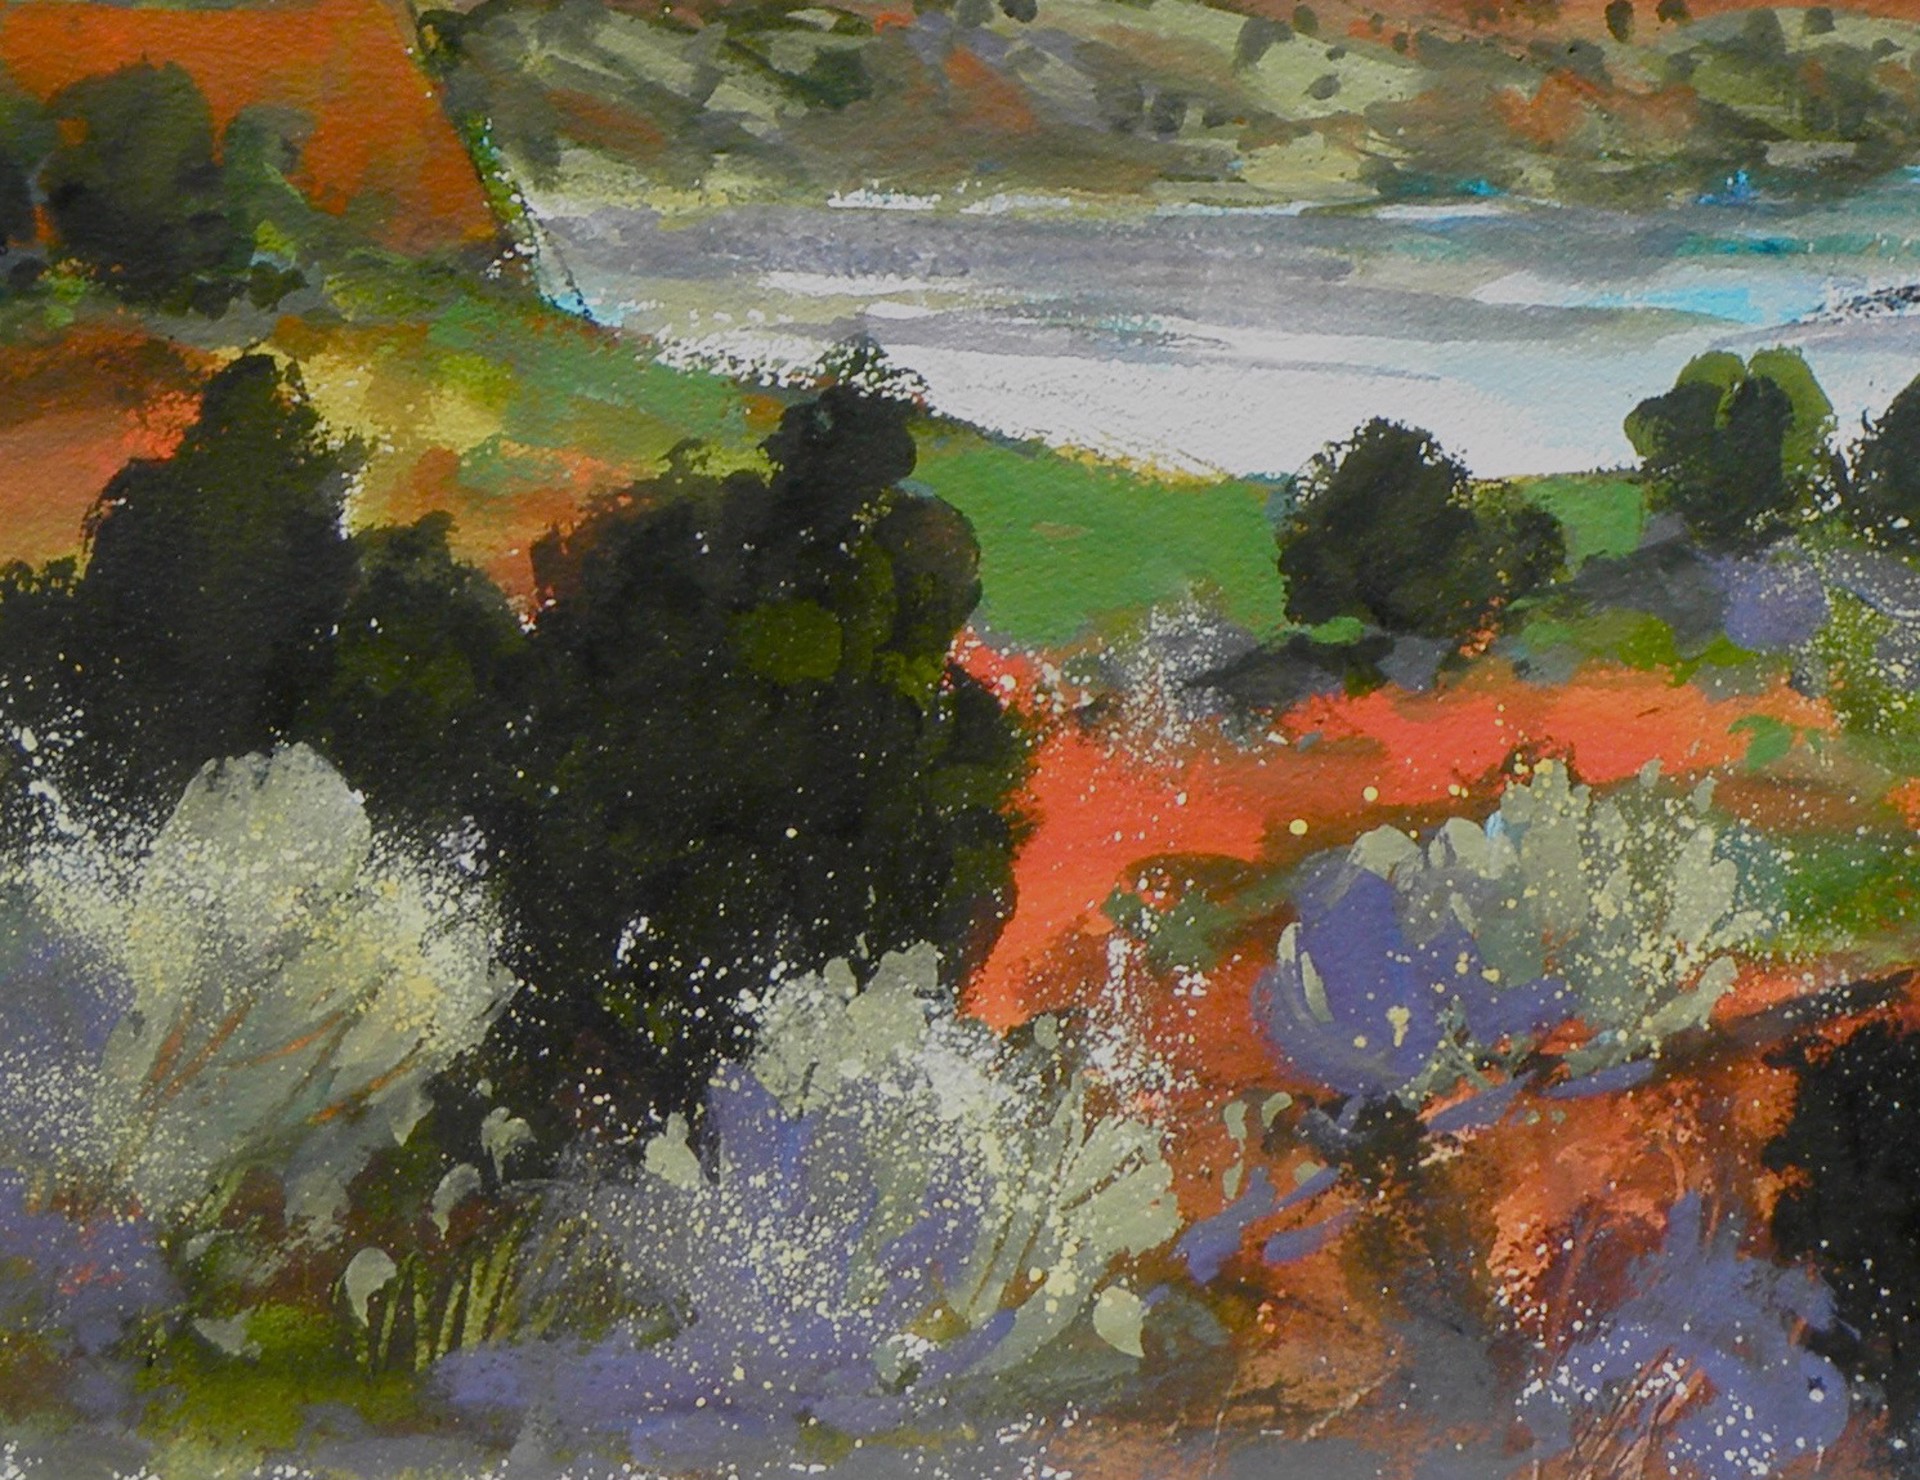 Watercolor painting by fine artist Evelyne Boren "Clouds Over Cerro Pedernal" depicting a landscape.